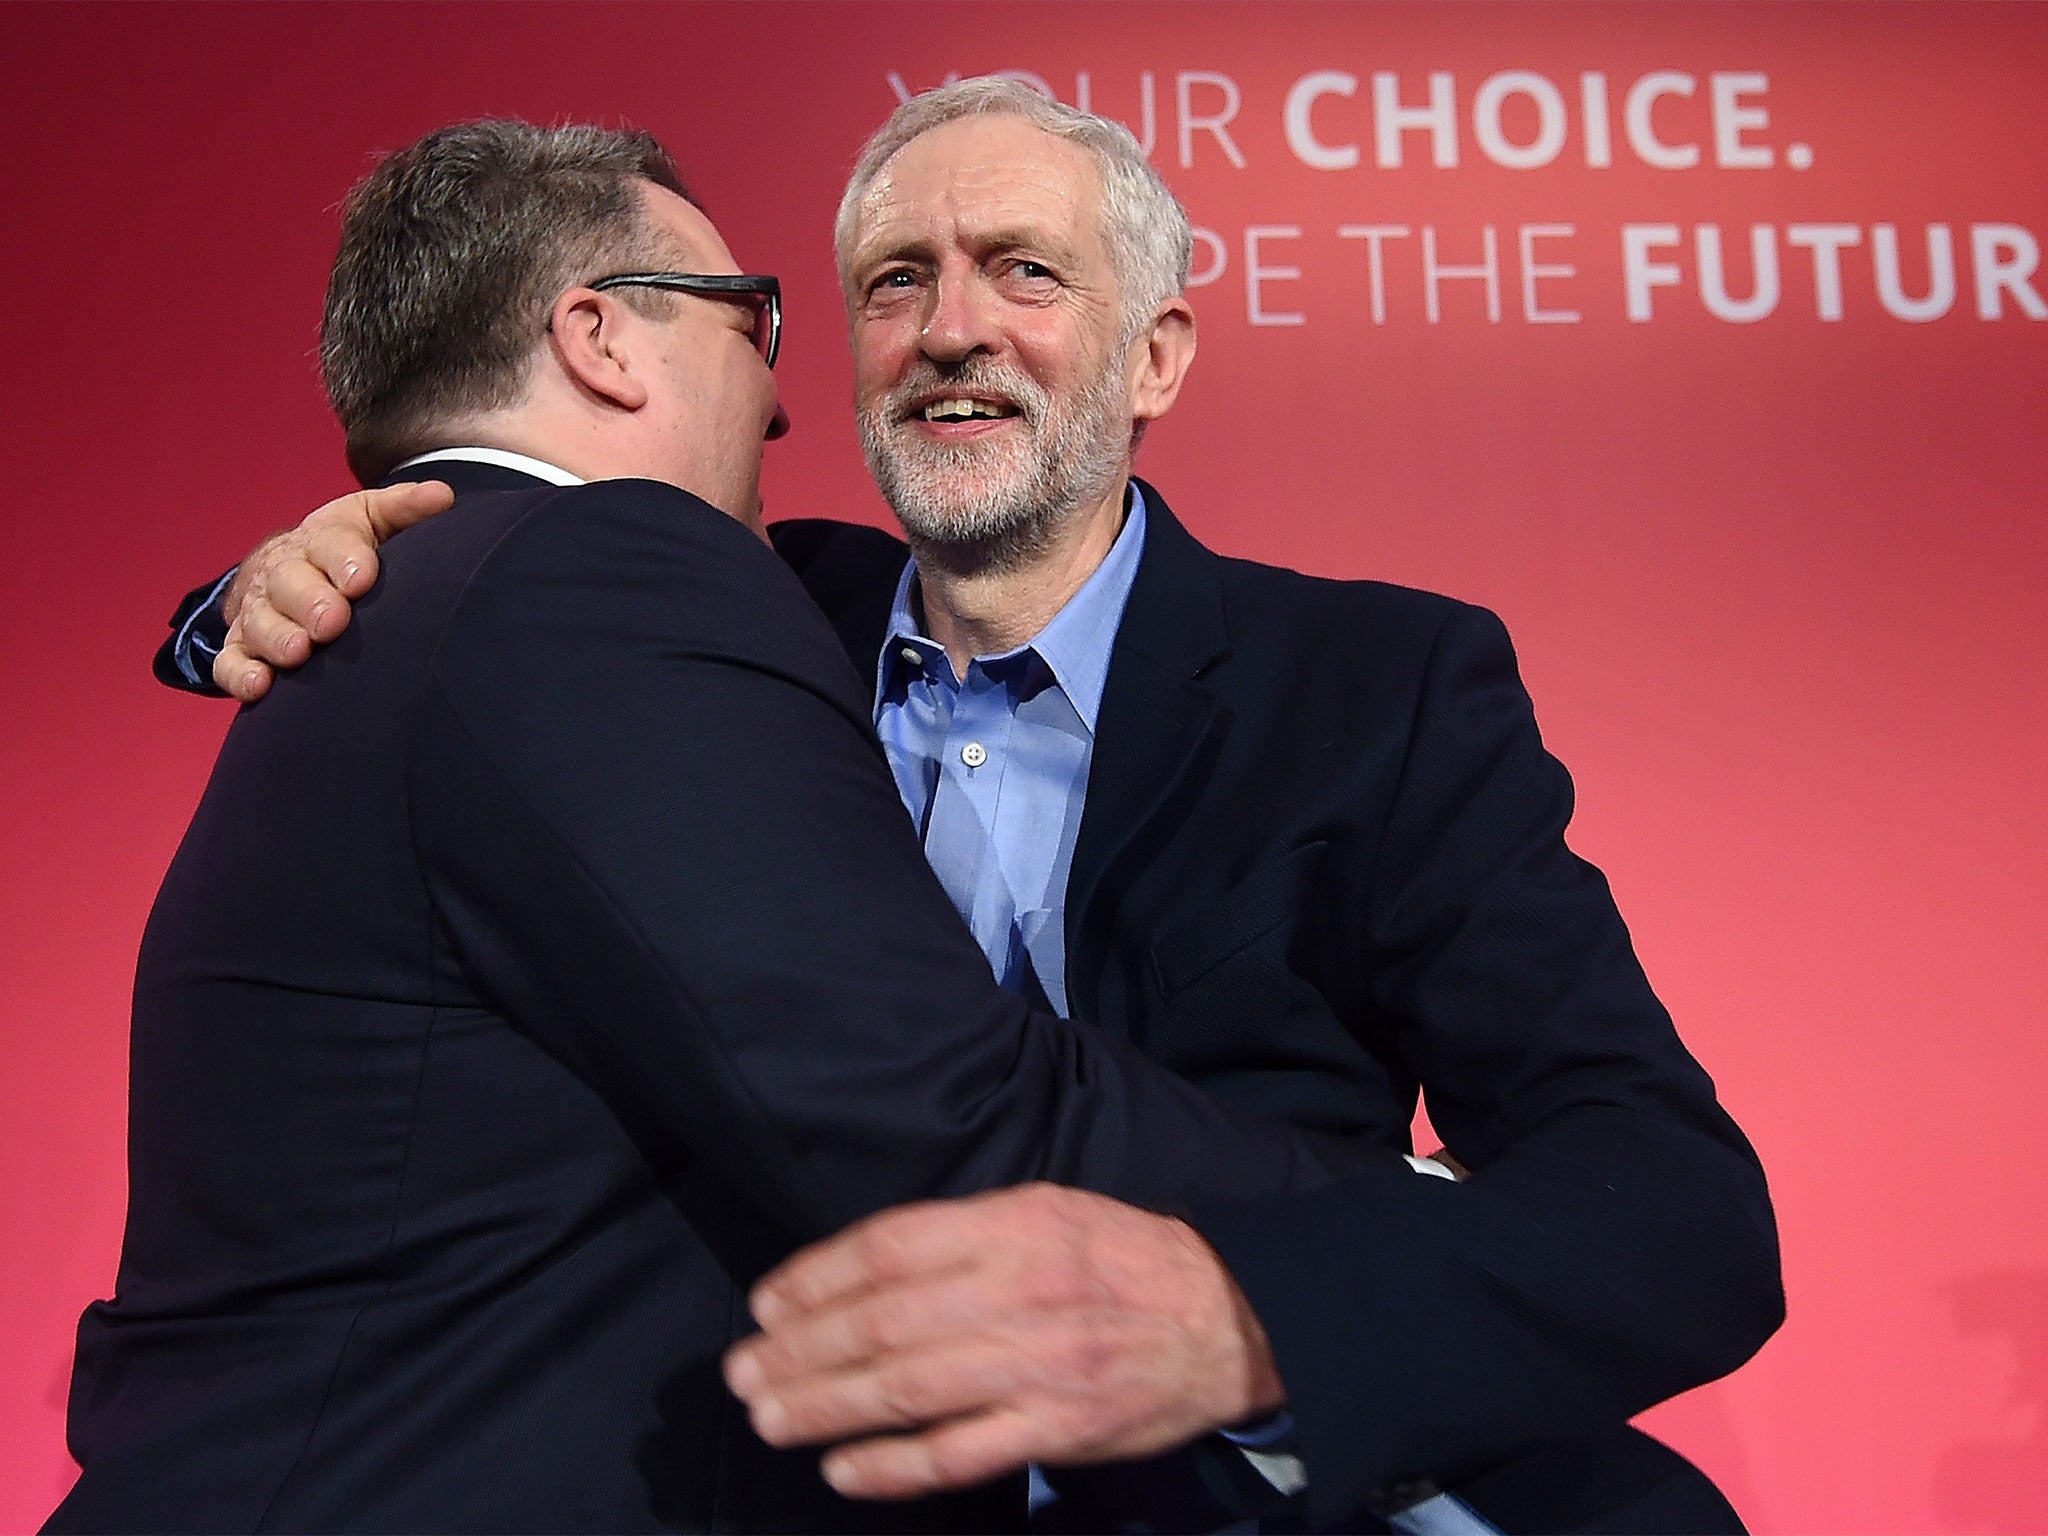 New deputy leader Tom Watson embraces Jeremy Corbyn as the pair celebrate victory